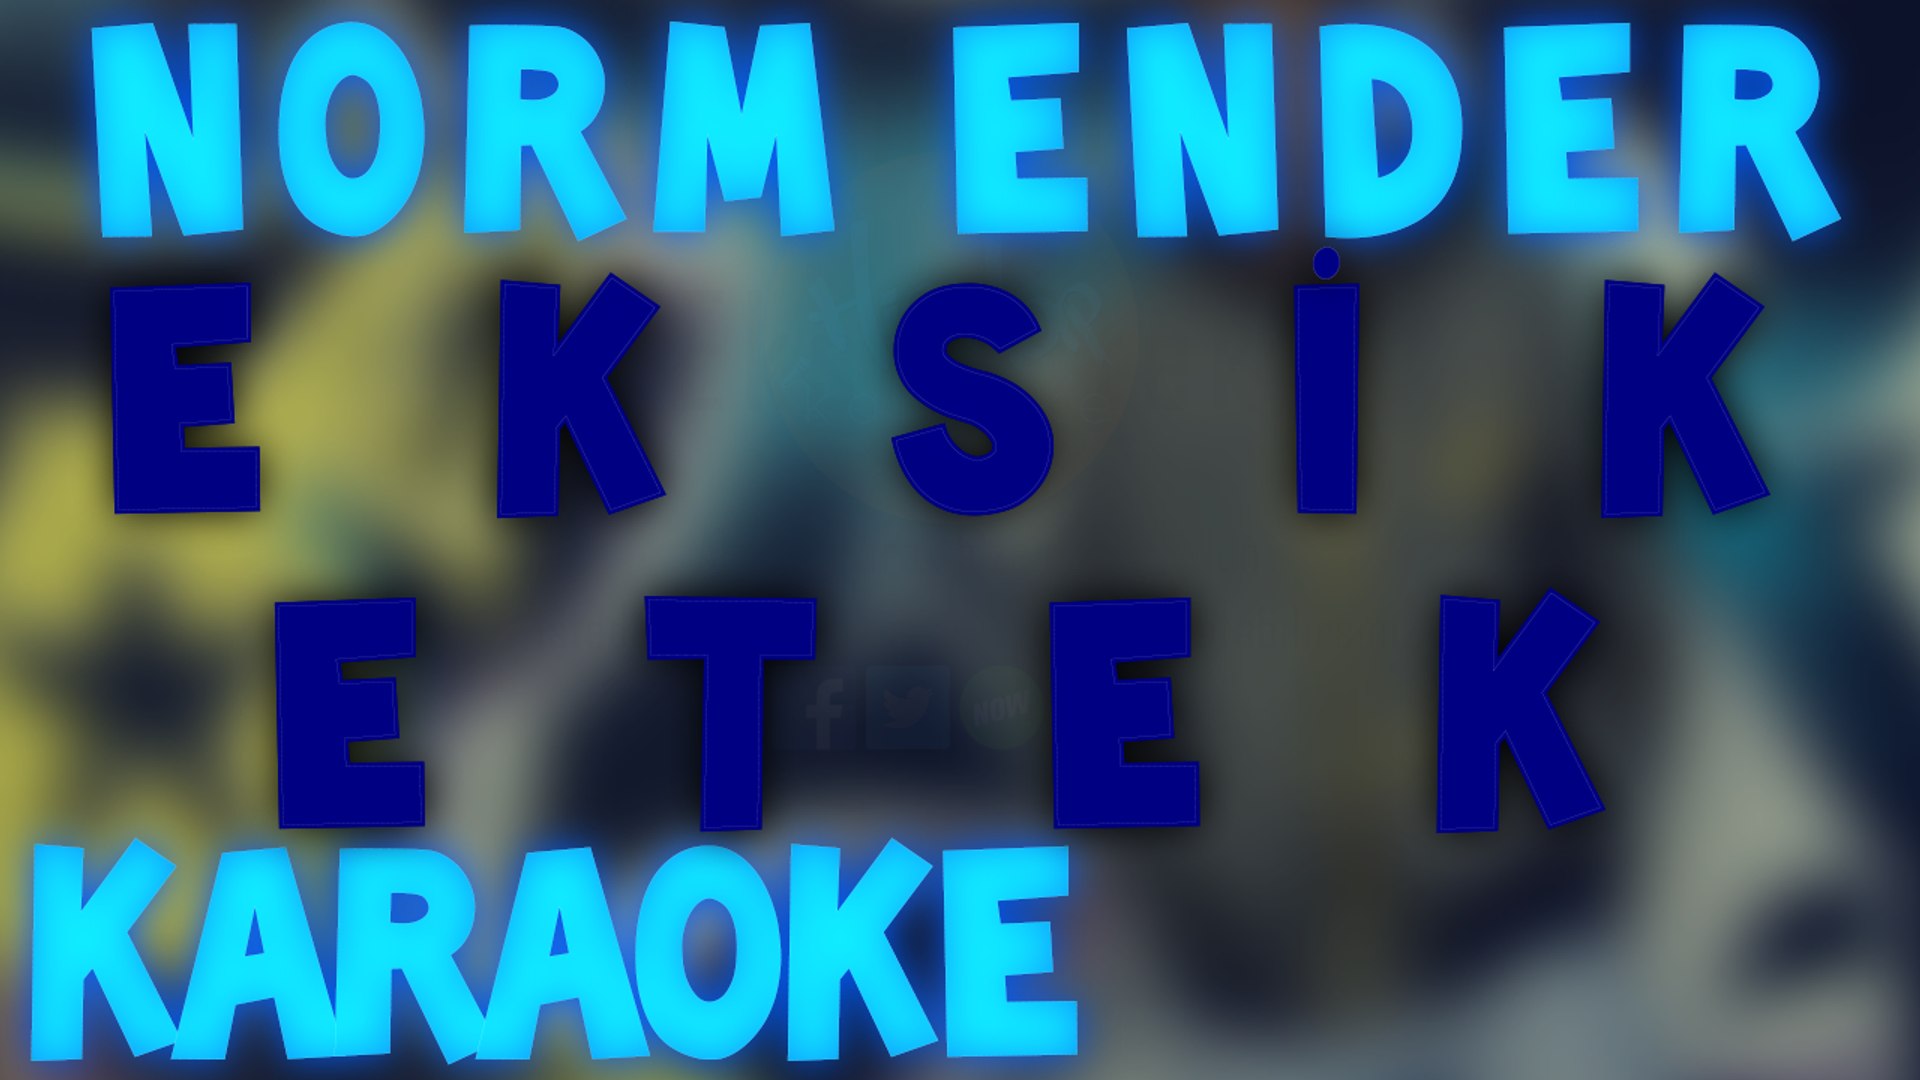 Norm Ender Ft. Norm Erman - Eksik Etek Karaoke - Dailymotion Video